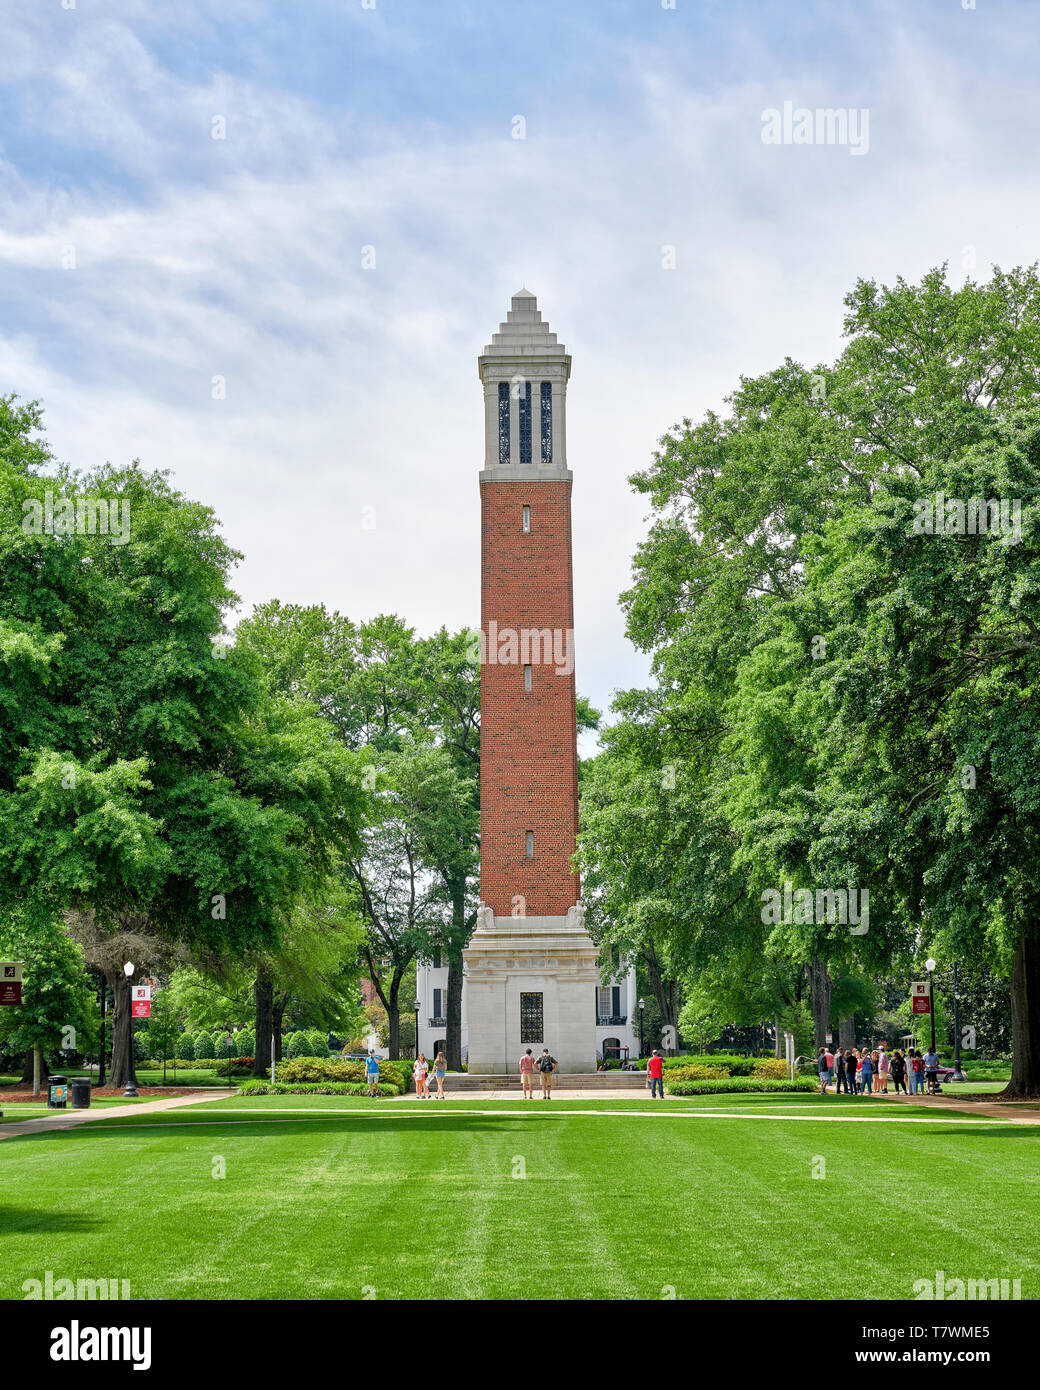 Denny Chimes tower on the quad at the University of Alabama in Tuscaloosa Alabama, USA. Stock Photo